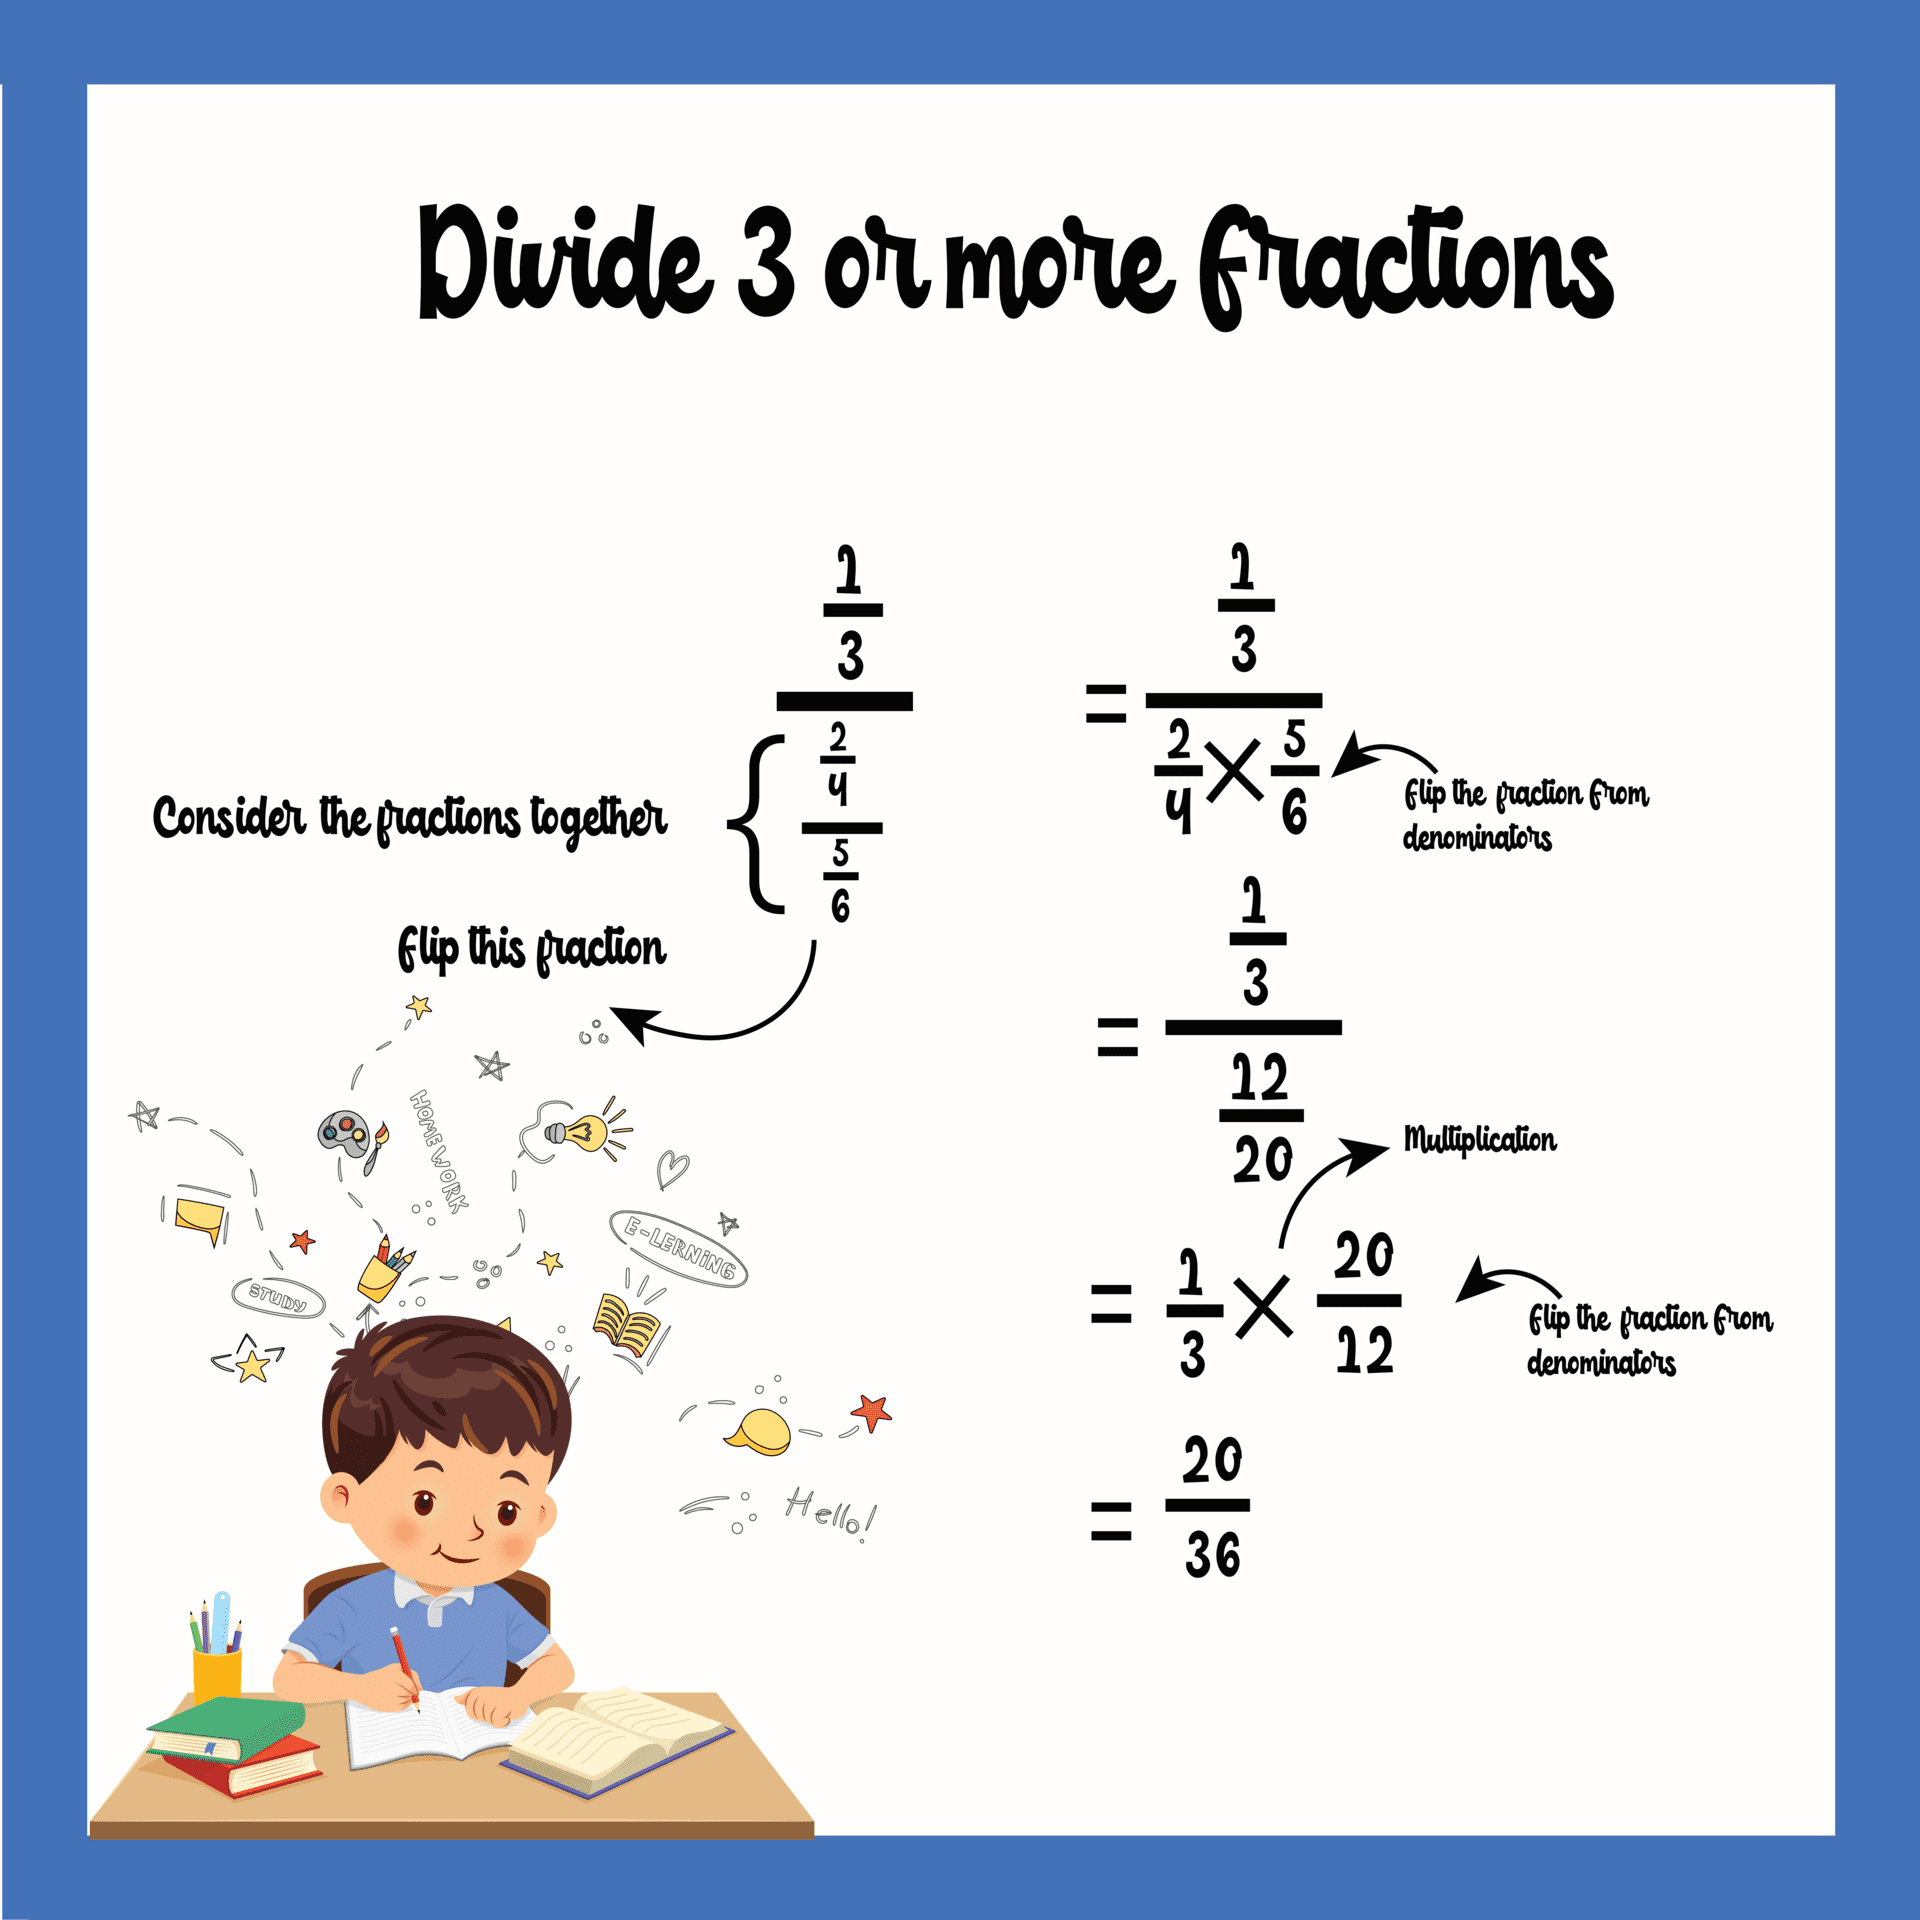 Divide 3 or more fractions for dividing fractions with unlike denominators worksheets